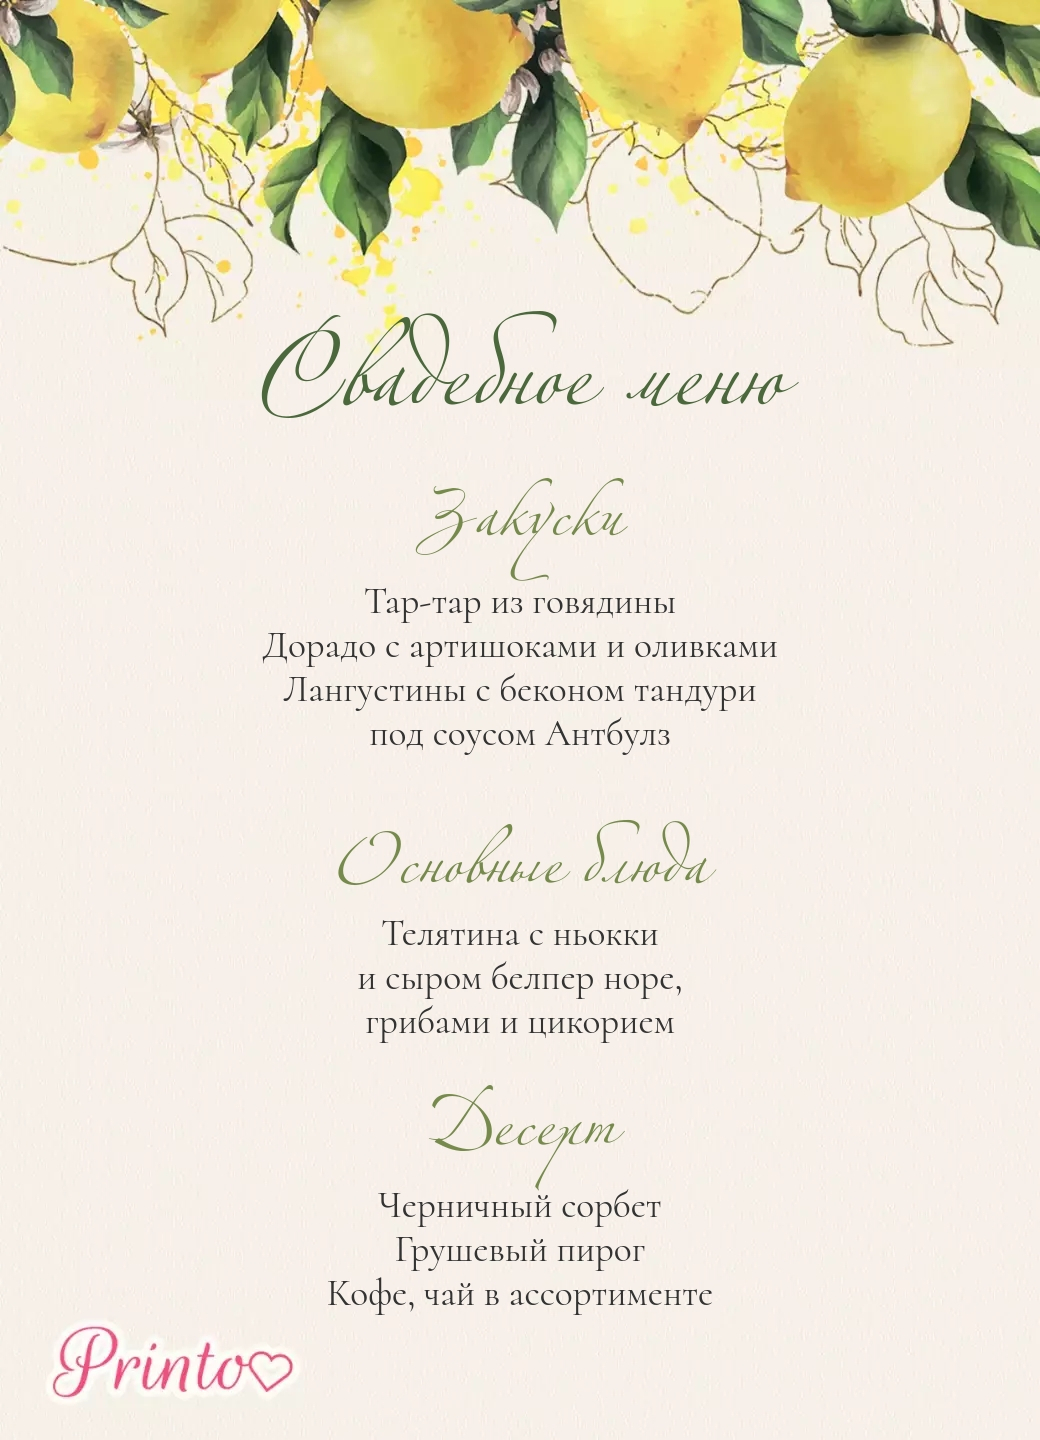 Шаблон свадебного меню "Вкус лета"